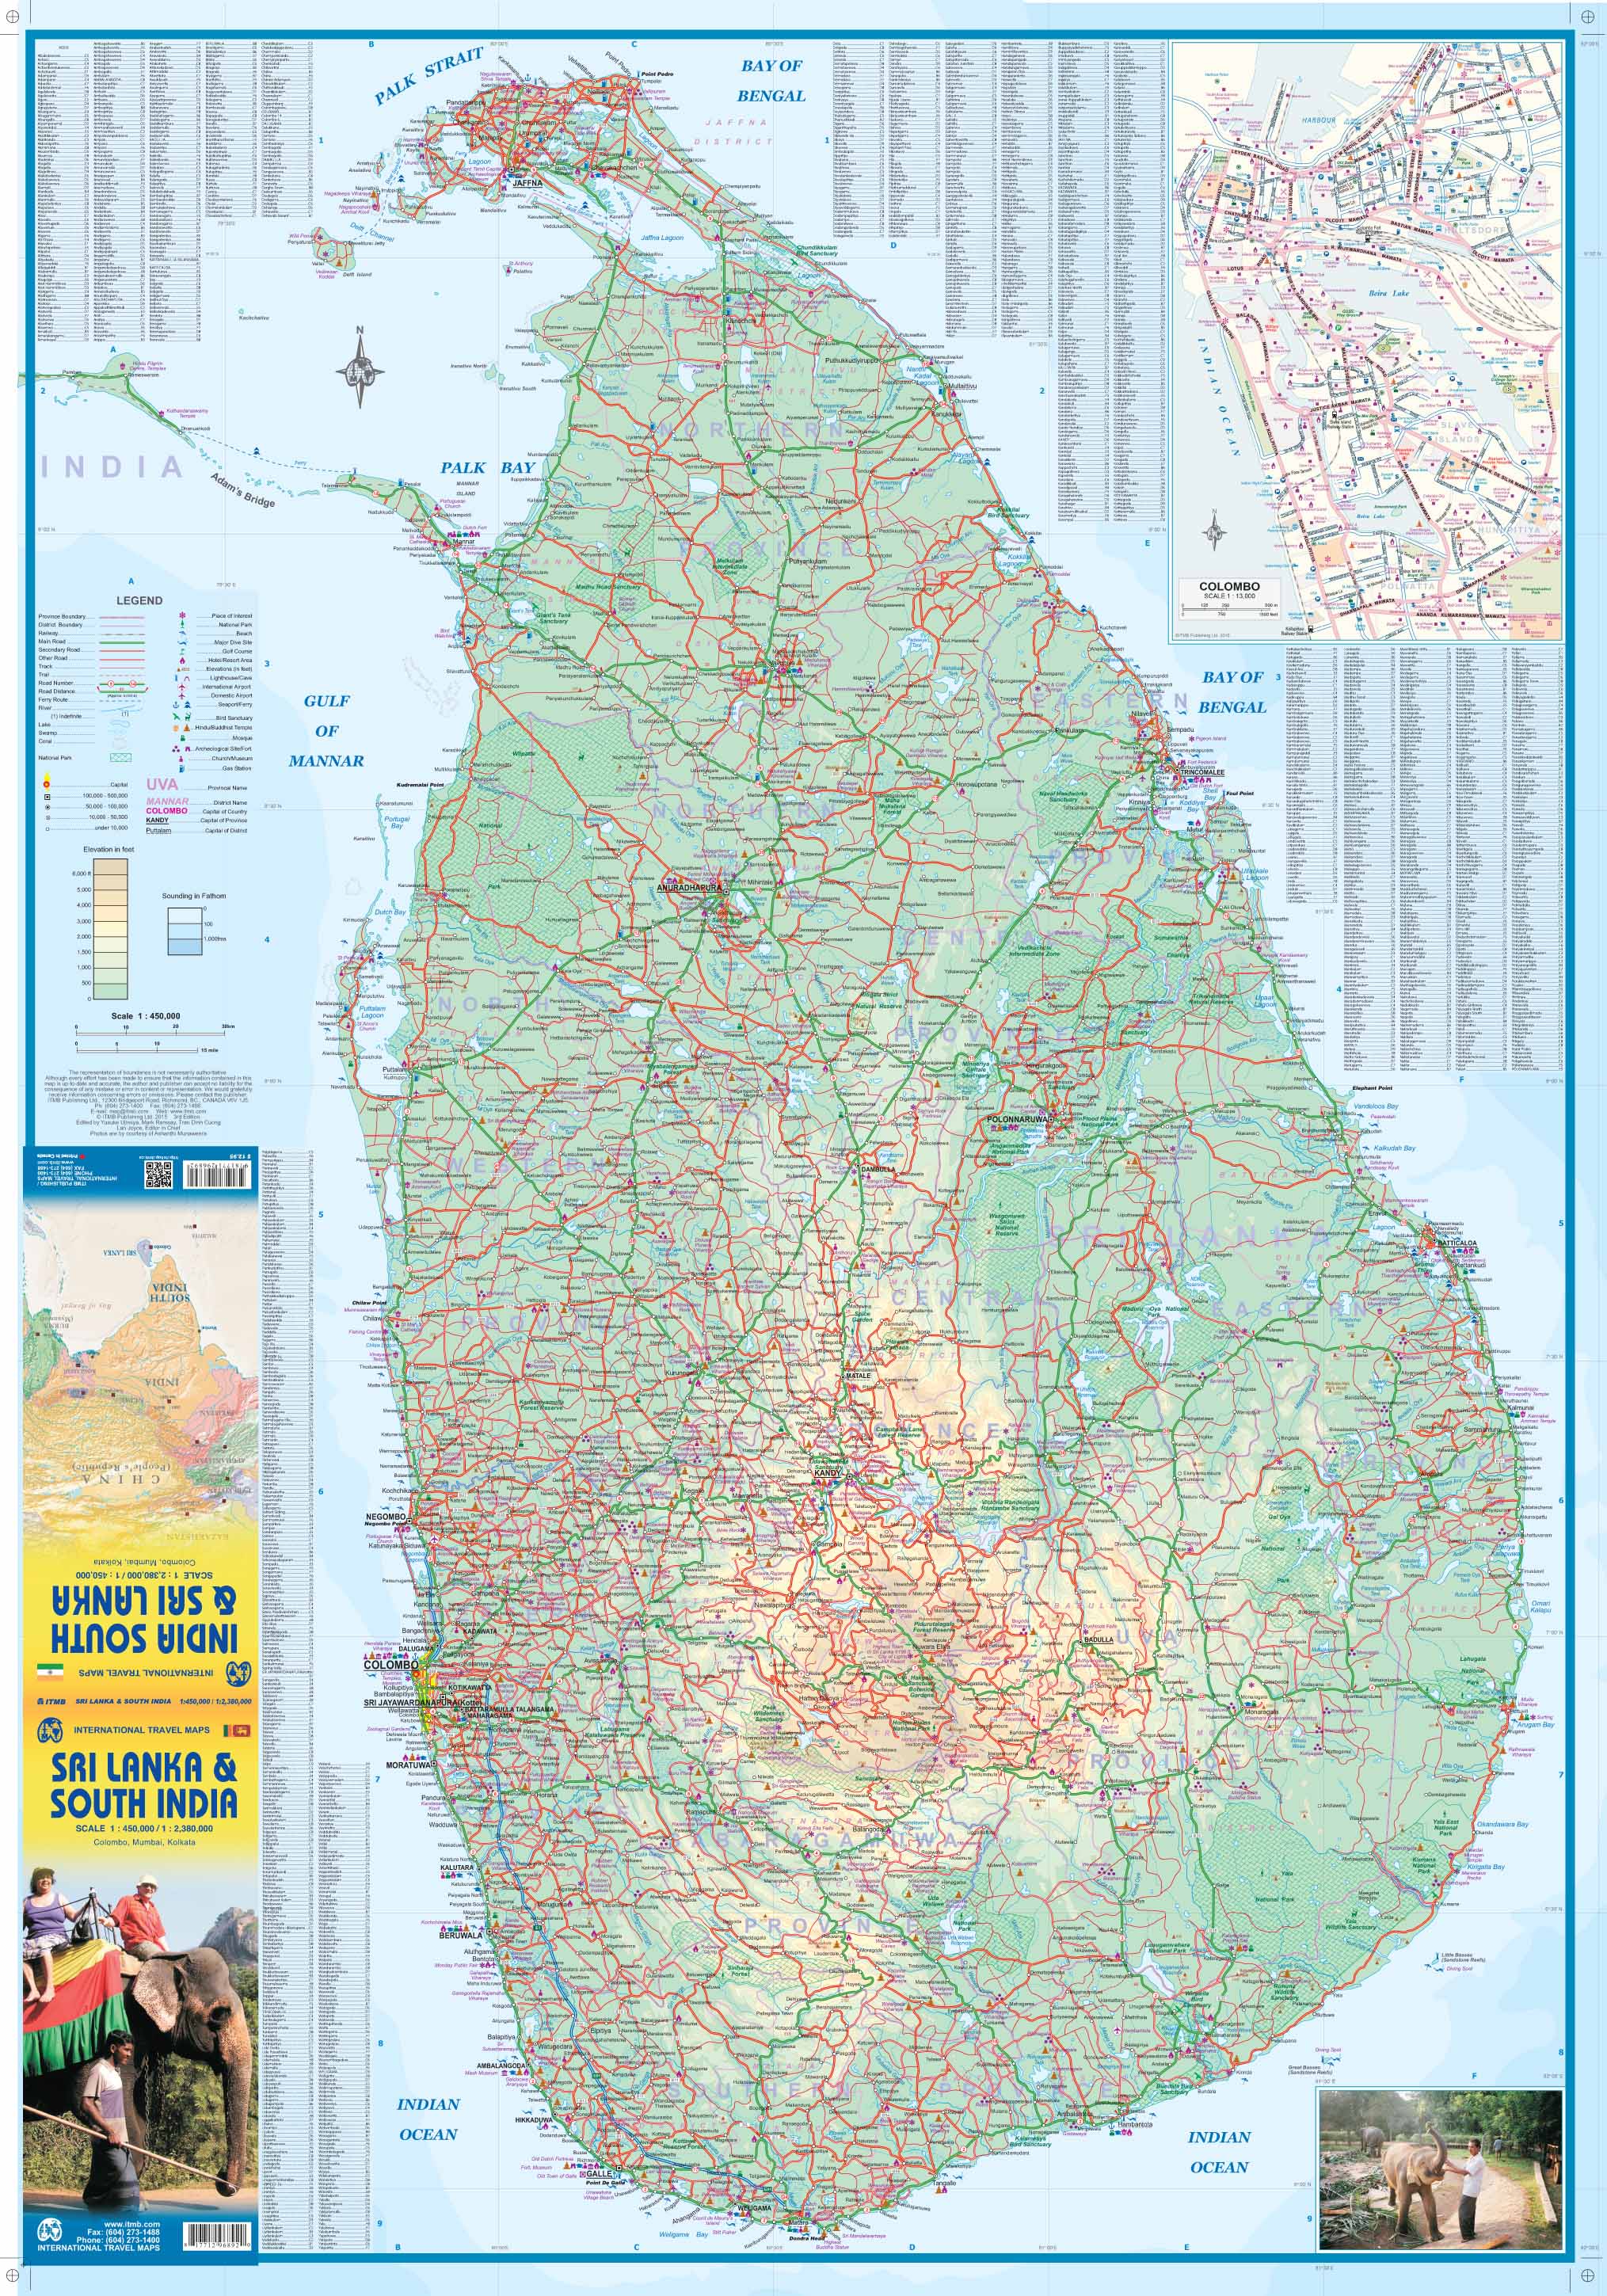 Sri Lanka / South India - 1:475,000 / 1:1,820,000 ITM